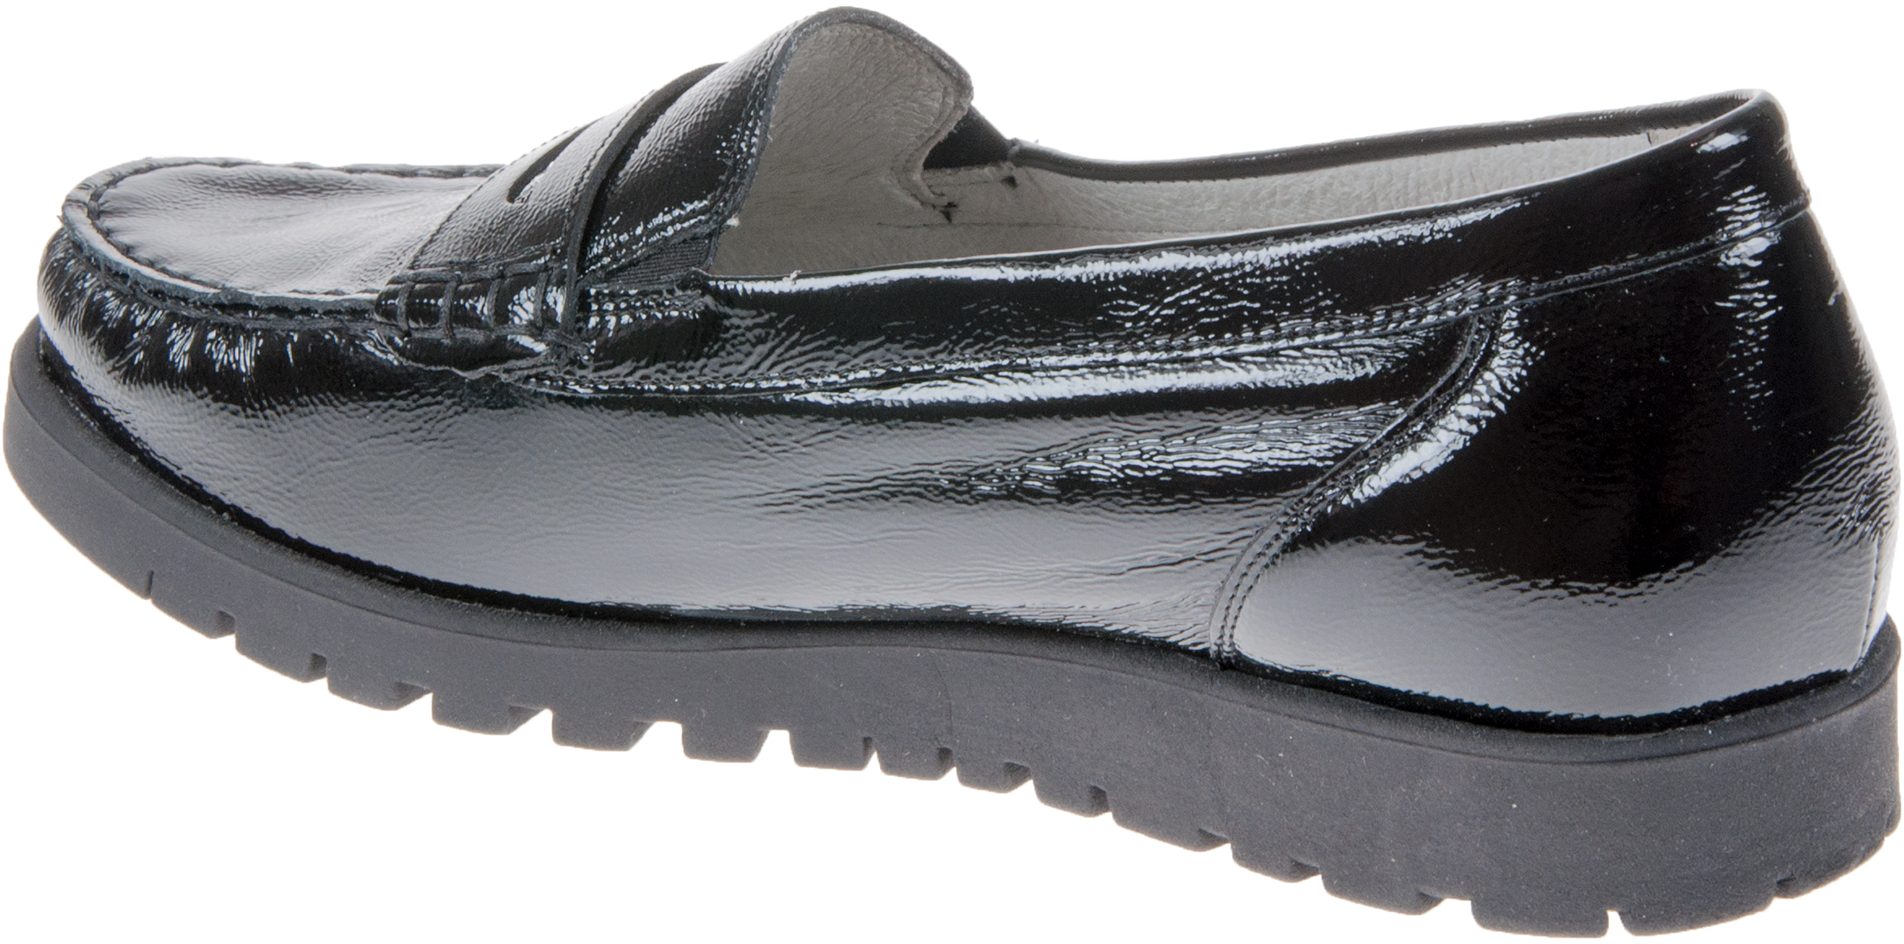 Waldlaufer Hegli 002 Black Patent 549002 143 001 - Everyday Shoes ...